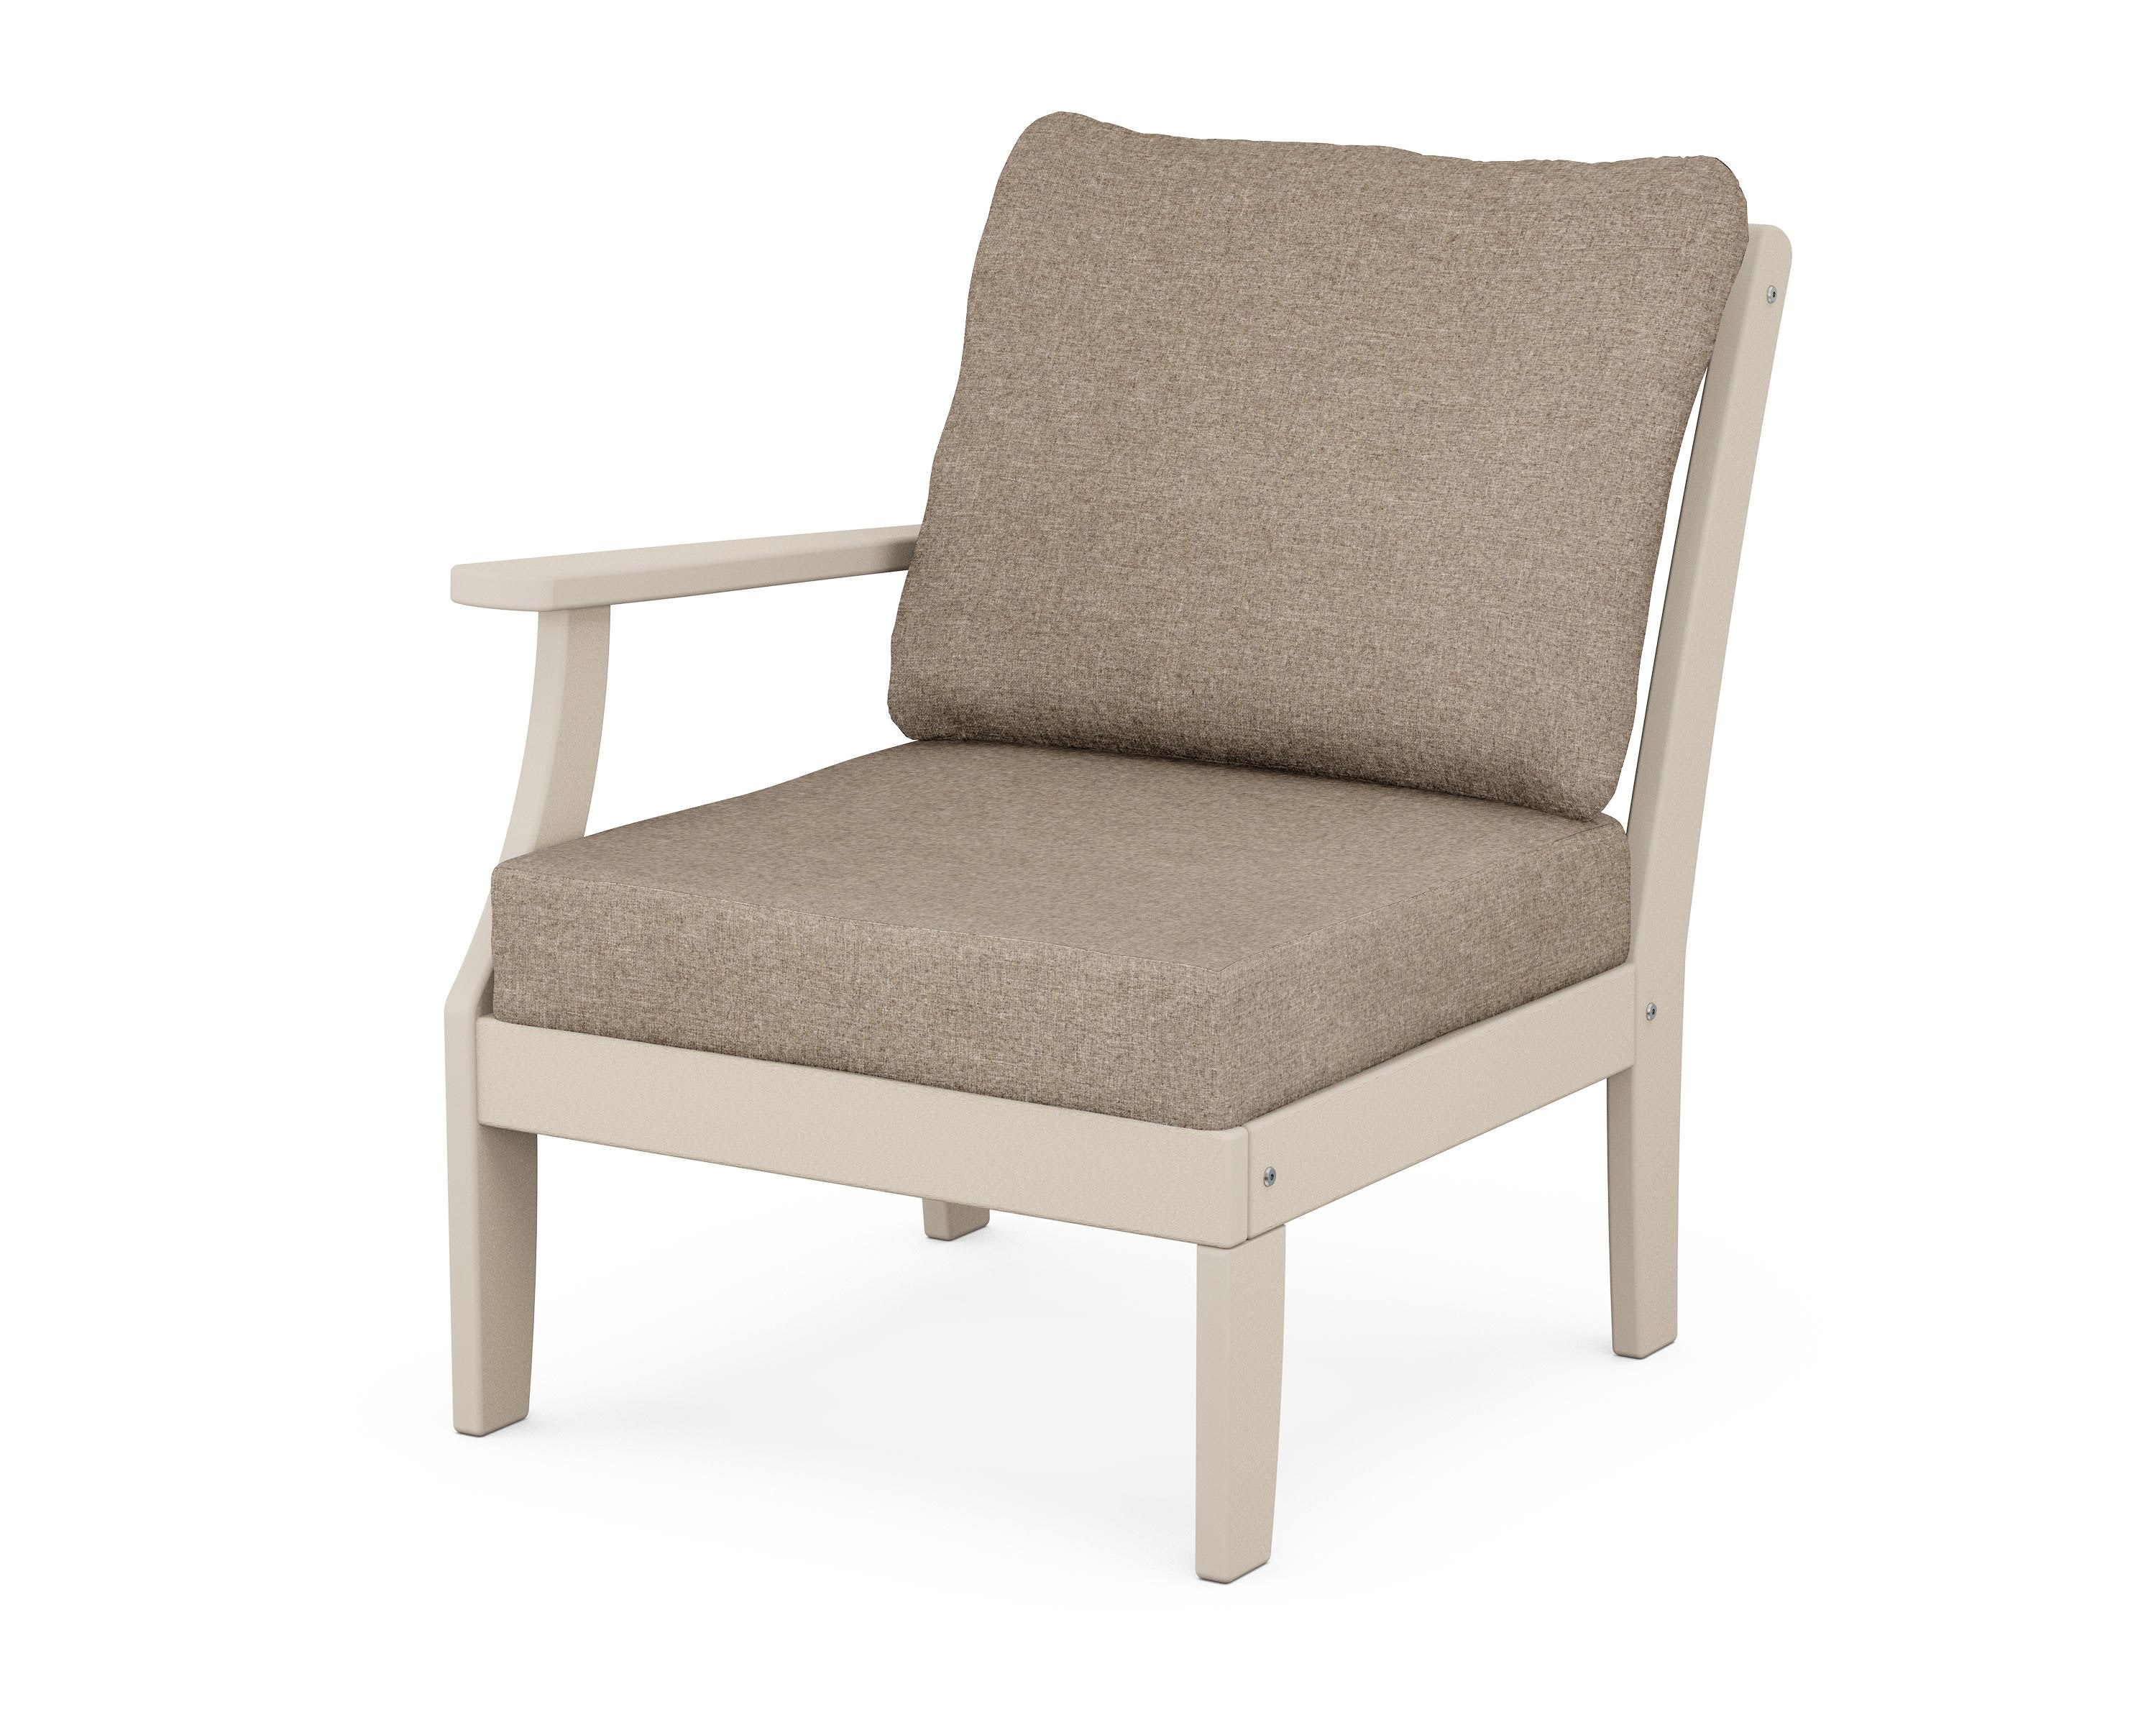 Trex Outdoor Furniture Yacht Club Modular Left Arm Chair